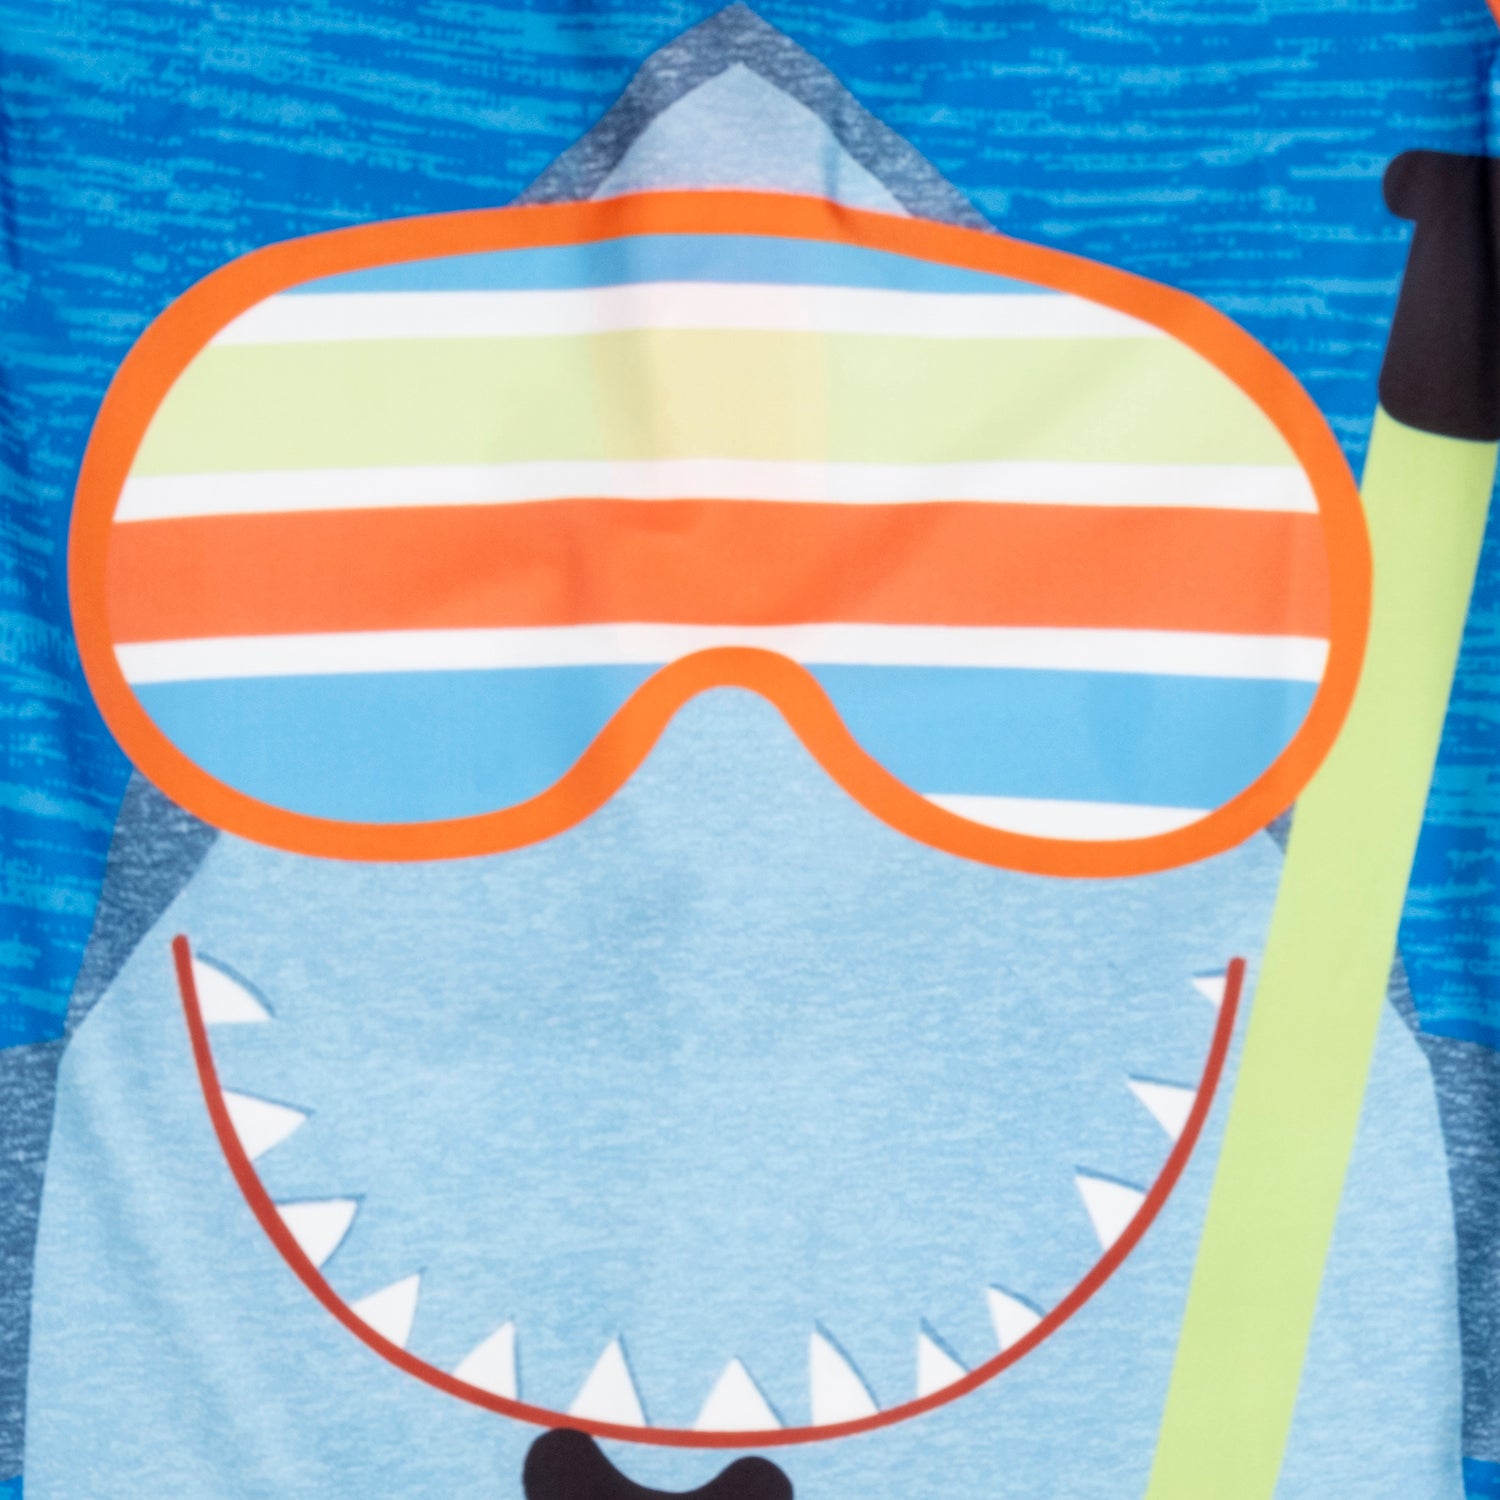 Baby Moo Scuba Beach Bodysuit One-Piece Swimsuit Pool Swimming Costume - Blue